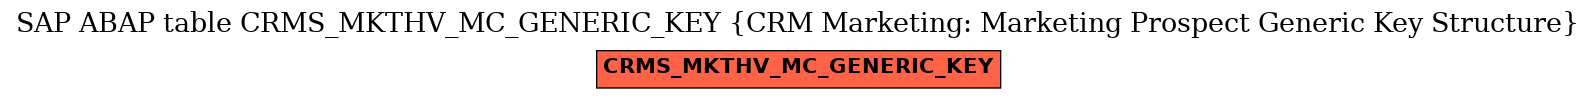 E-R Diagram for table CRMS_MKTHV_MC_GENERIC_KEY (CRM Marketing: Marketing Prospect Generic Key Structure)